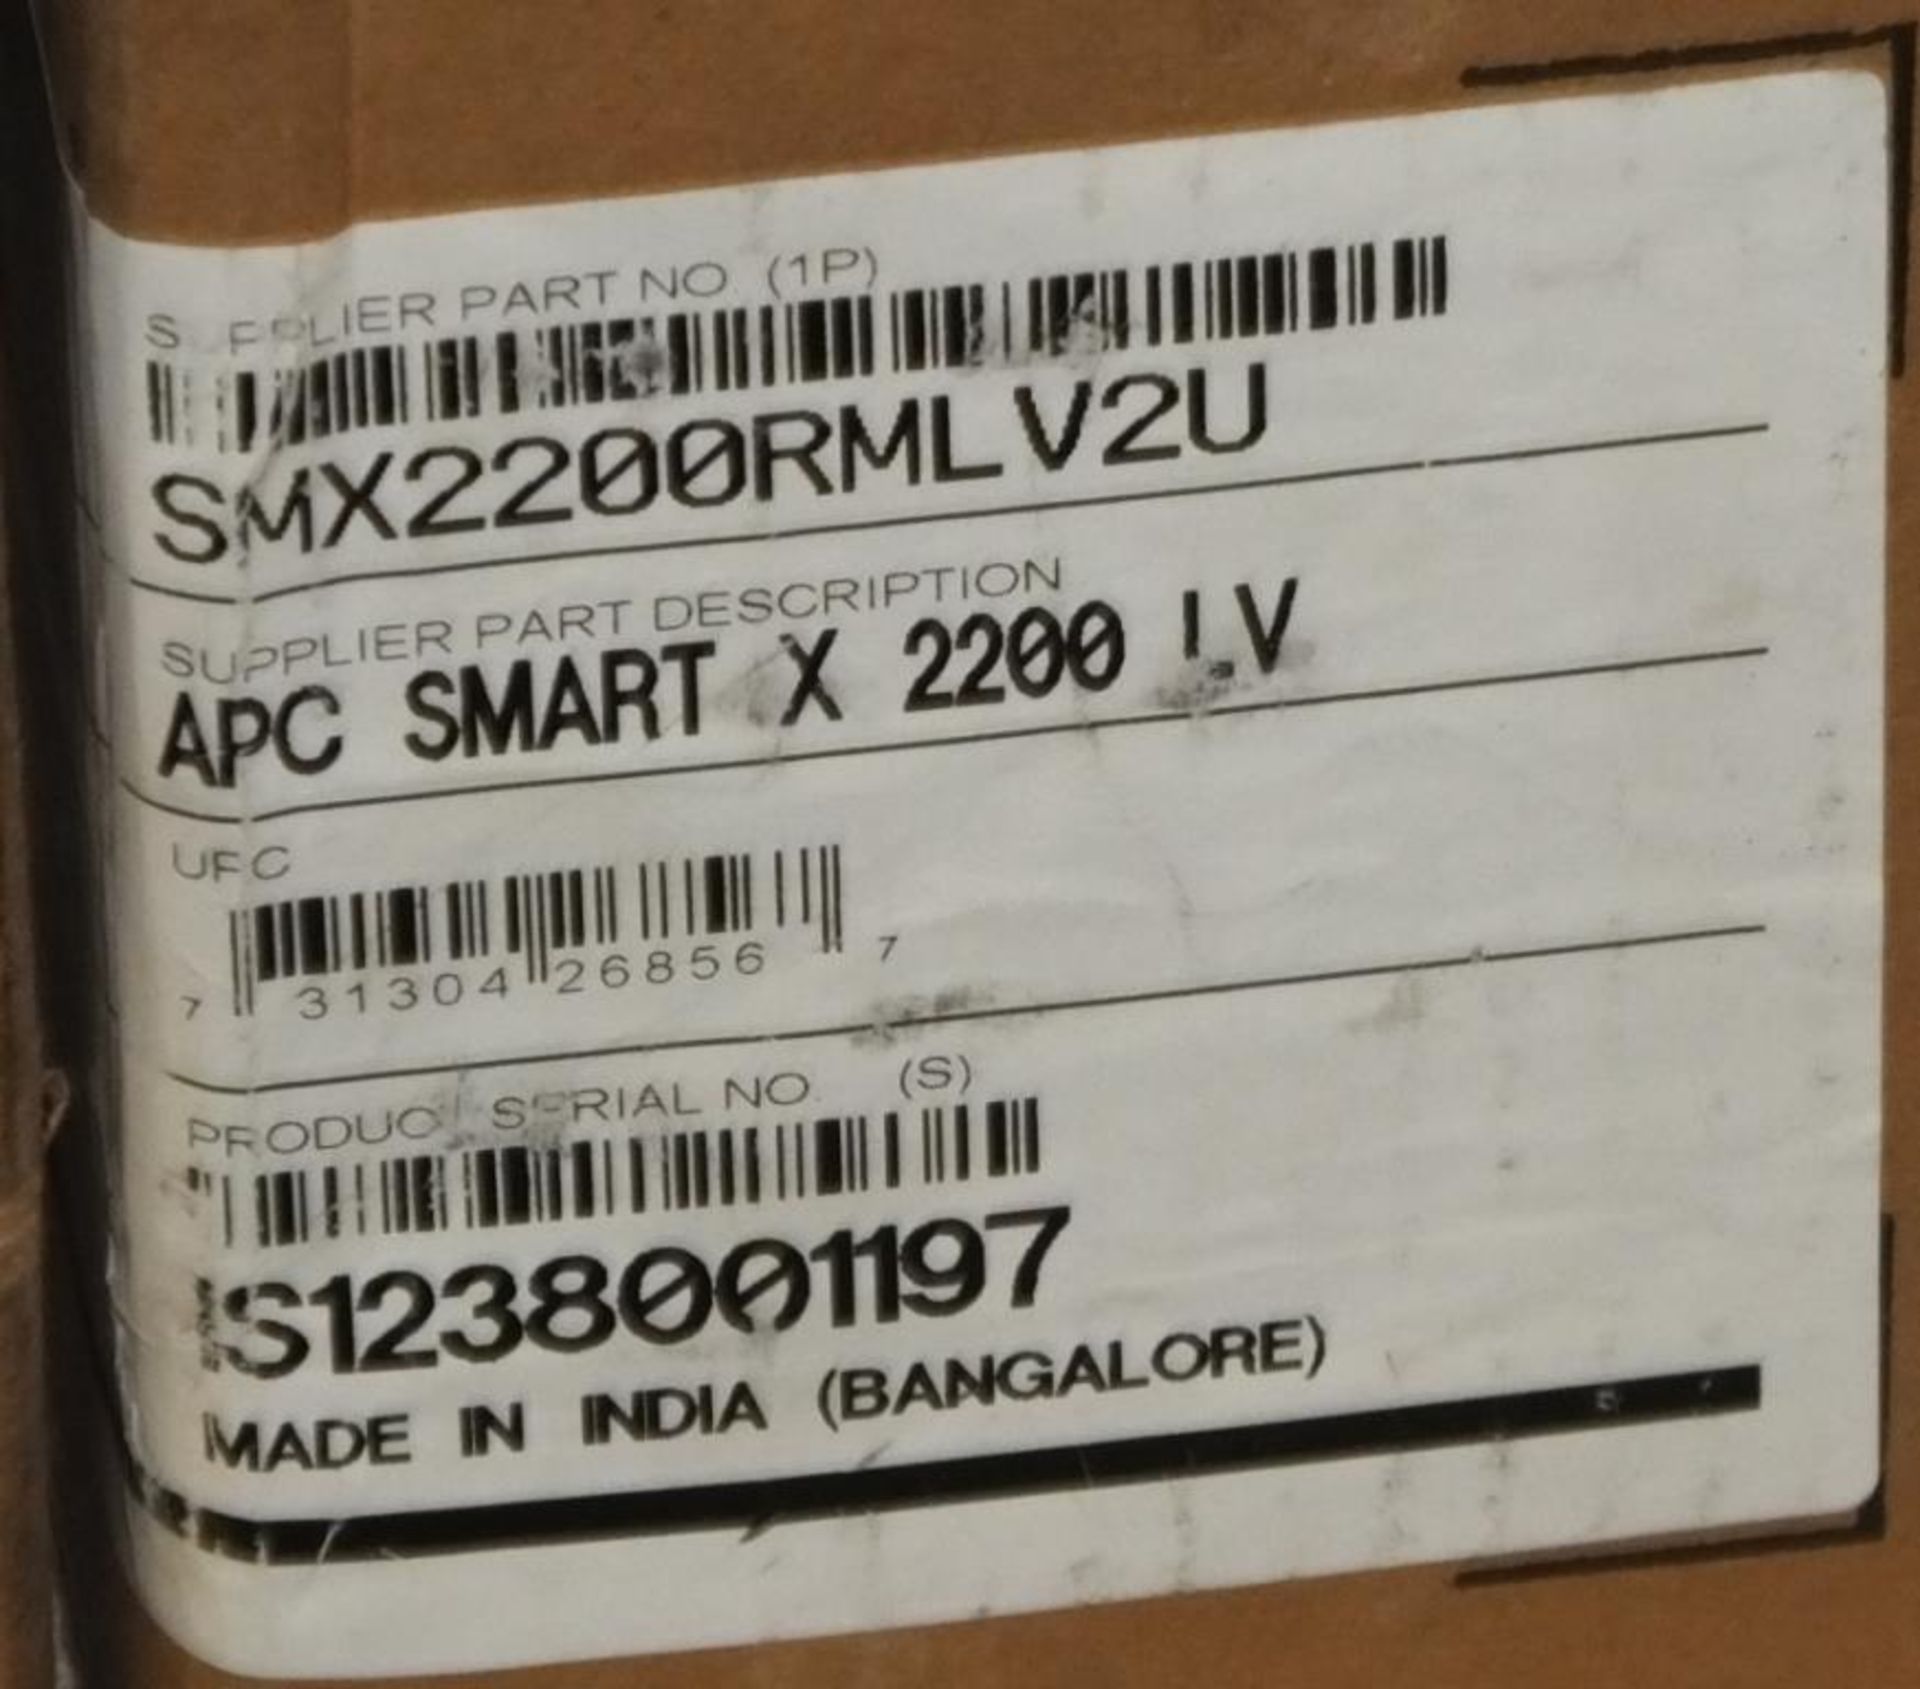 3x APC Smart X 2200 LV Smart Battery Power Supply Units - Image 5 of 5